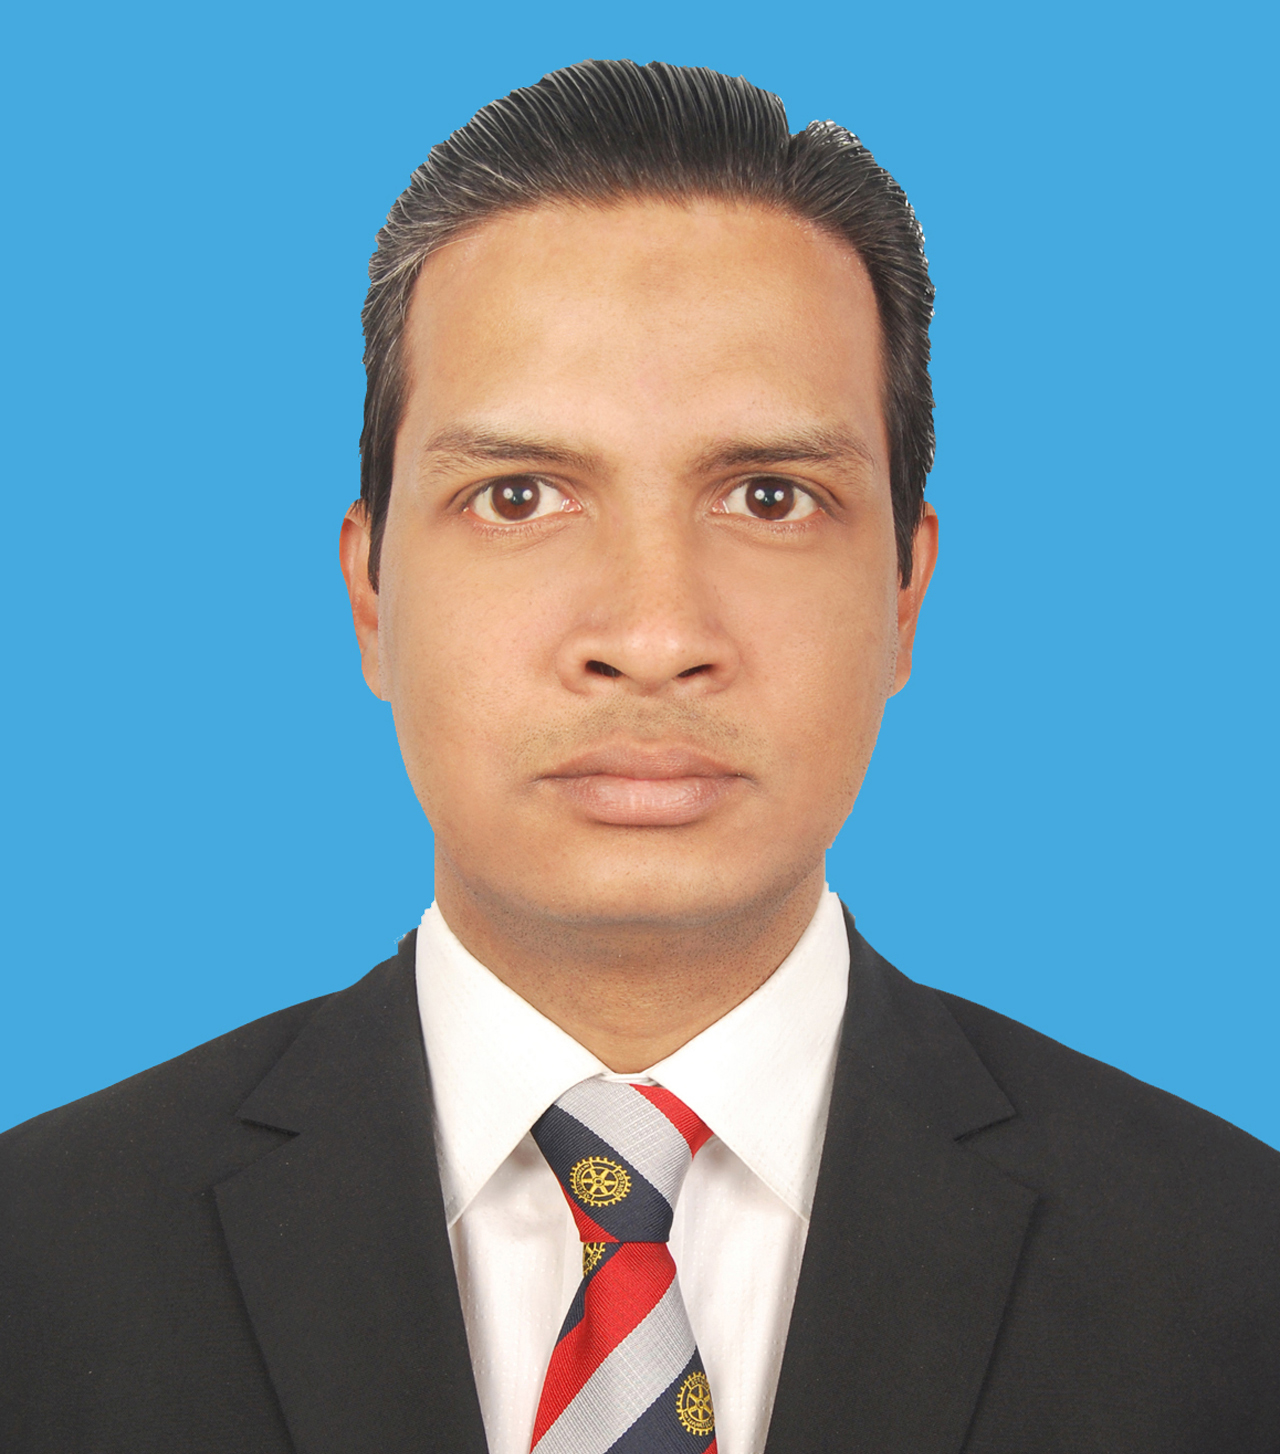 Rtn. Mohammad Monirul Haque